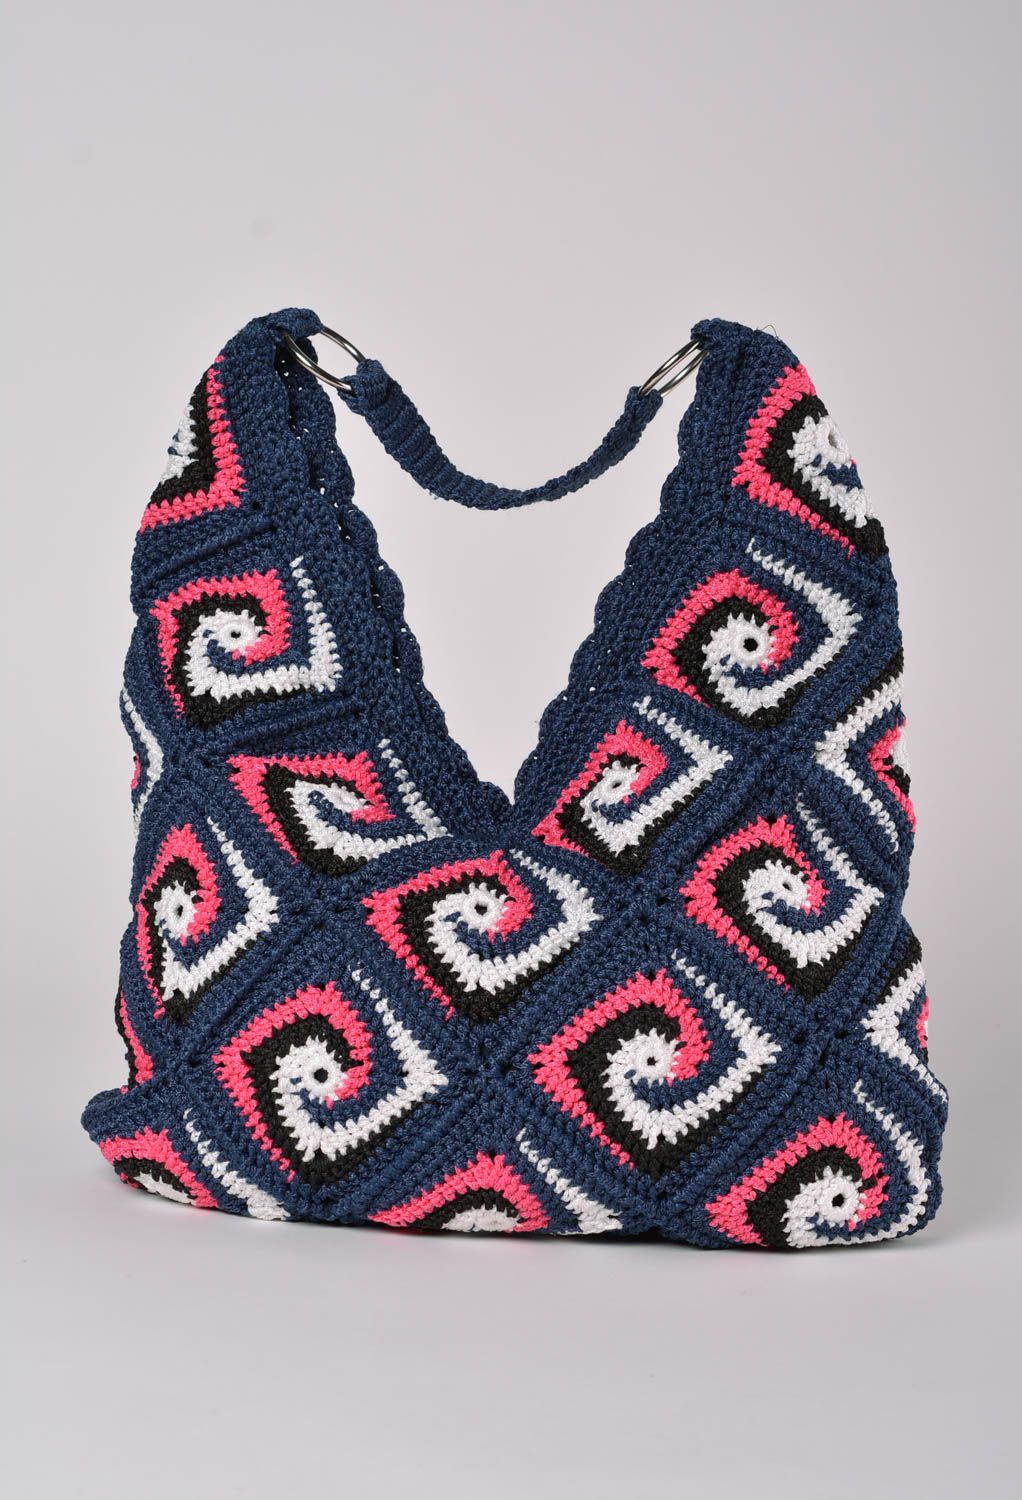 Colorful handmade designer crochet women's handbag with lining photo 1